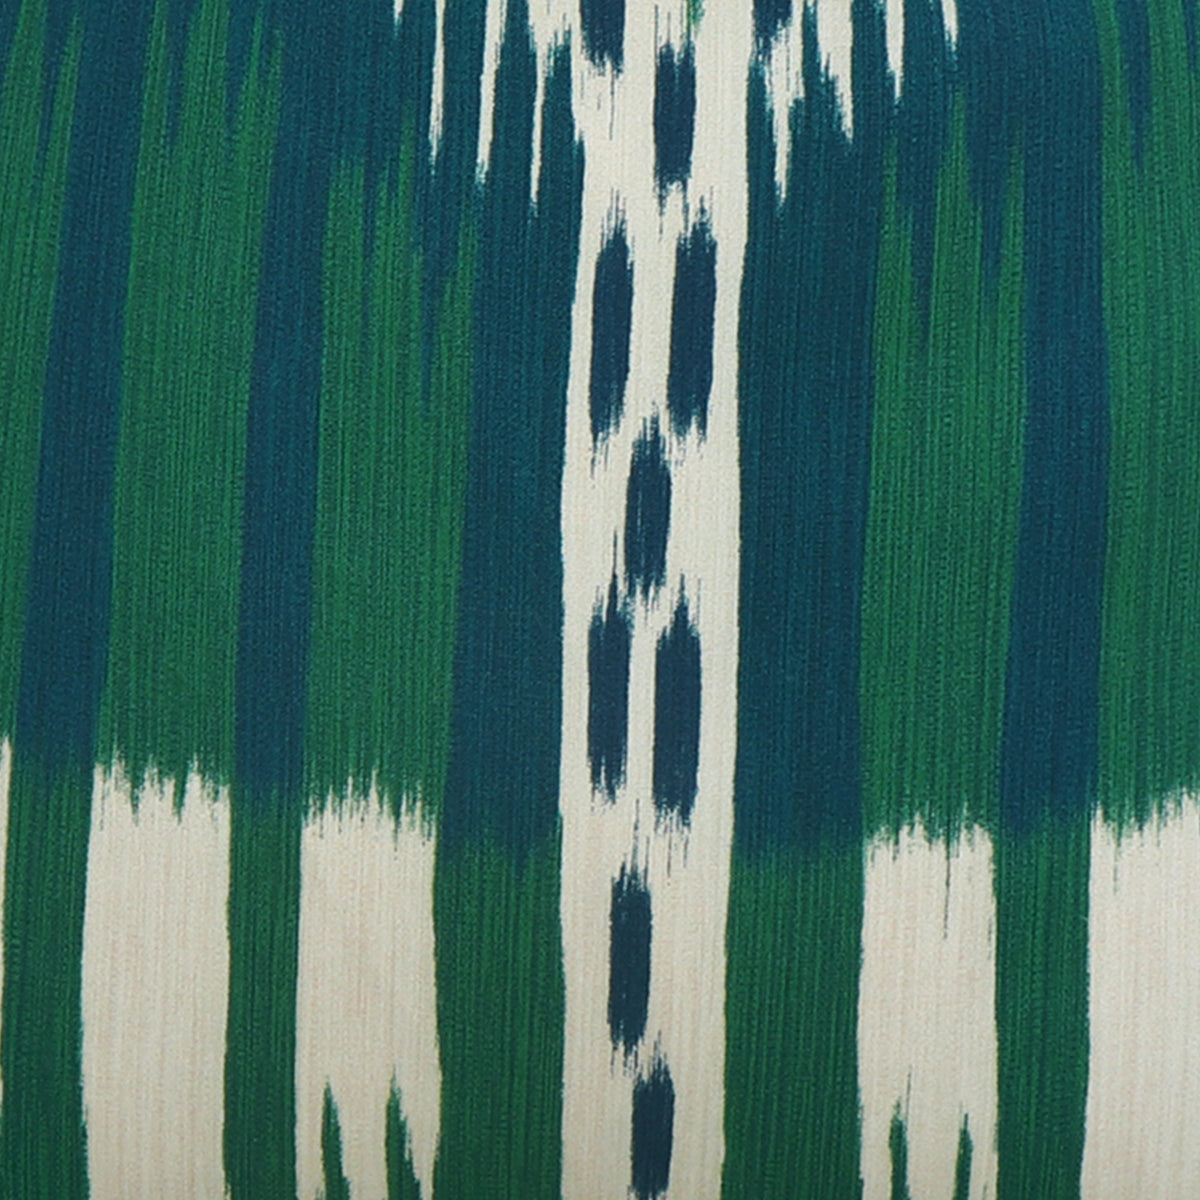 Bukhara Emerald Peacock / 4x4 inch Fabric Swatch